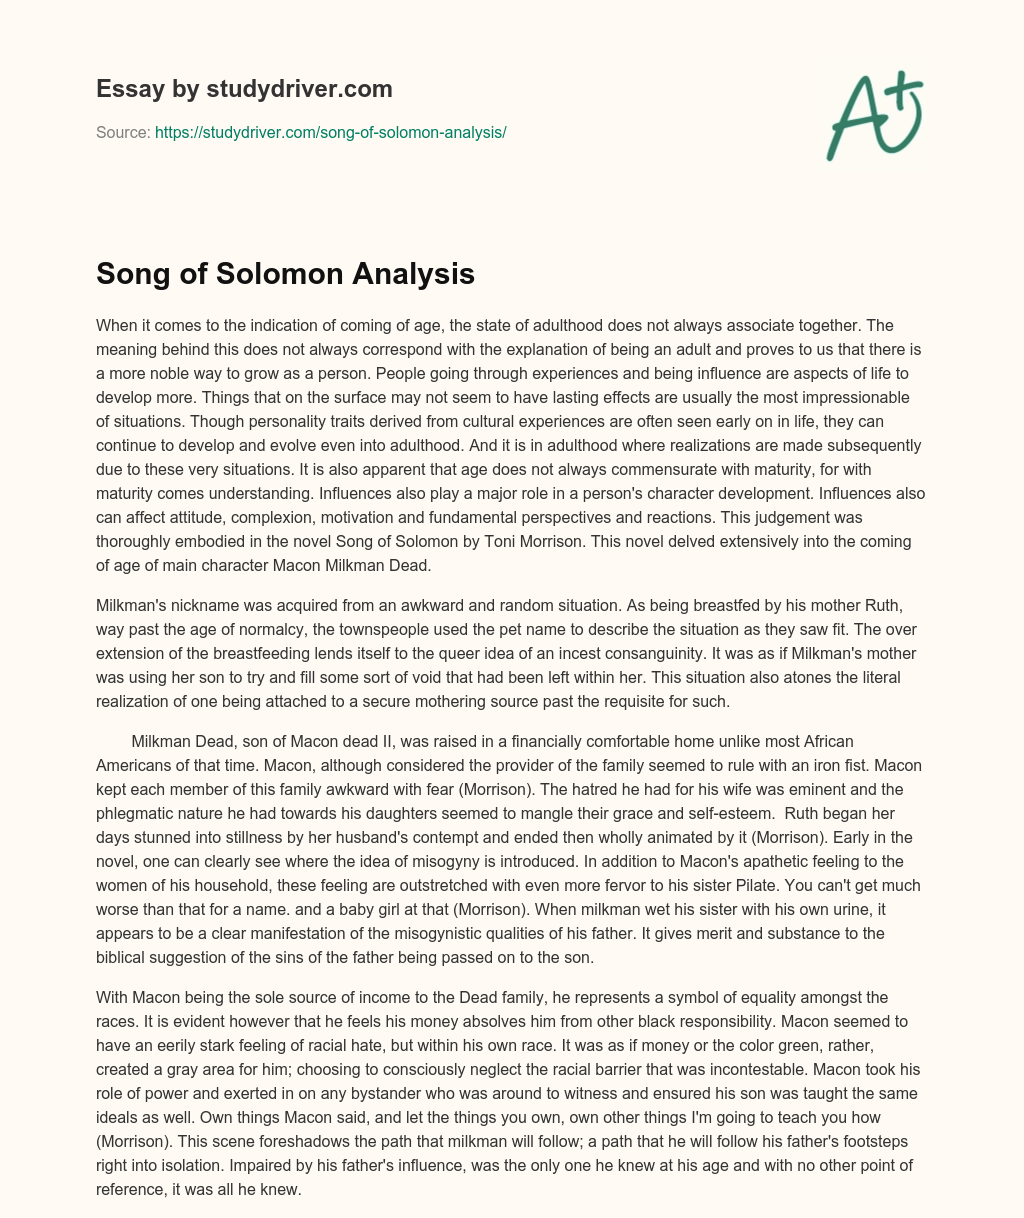 Song of Solomon Analysis essay